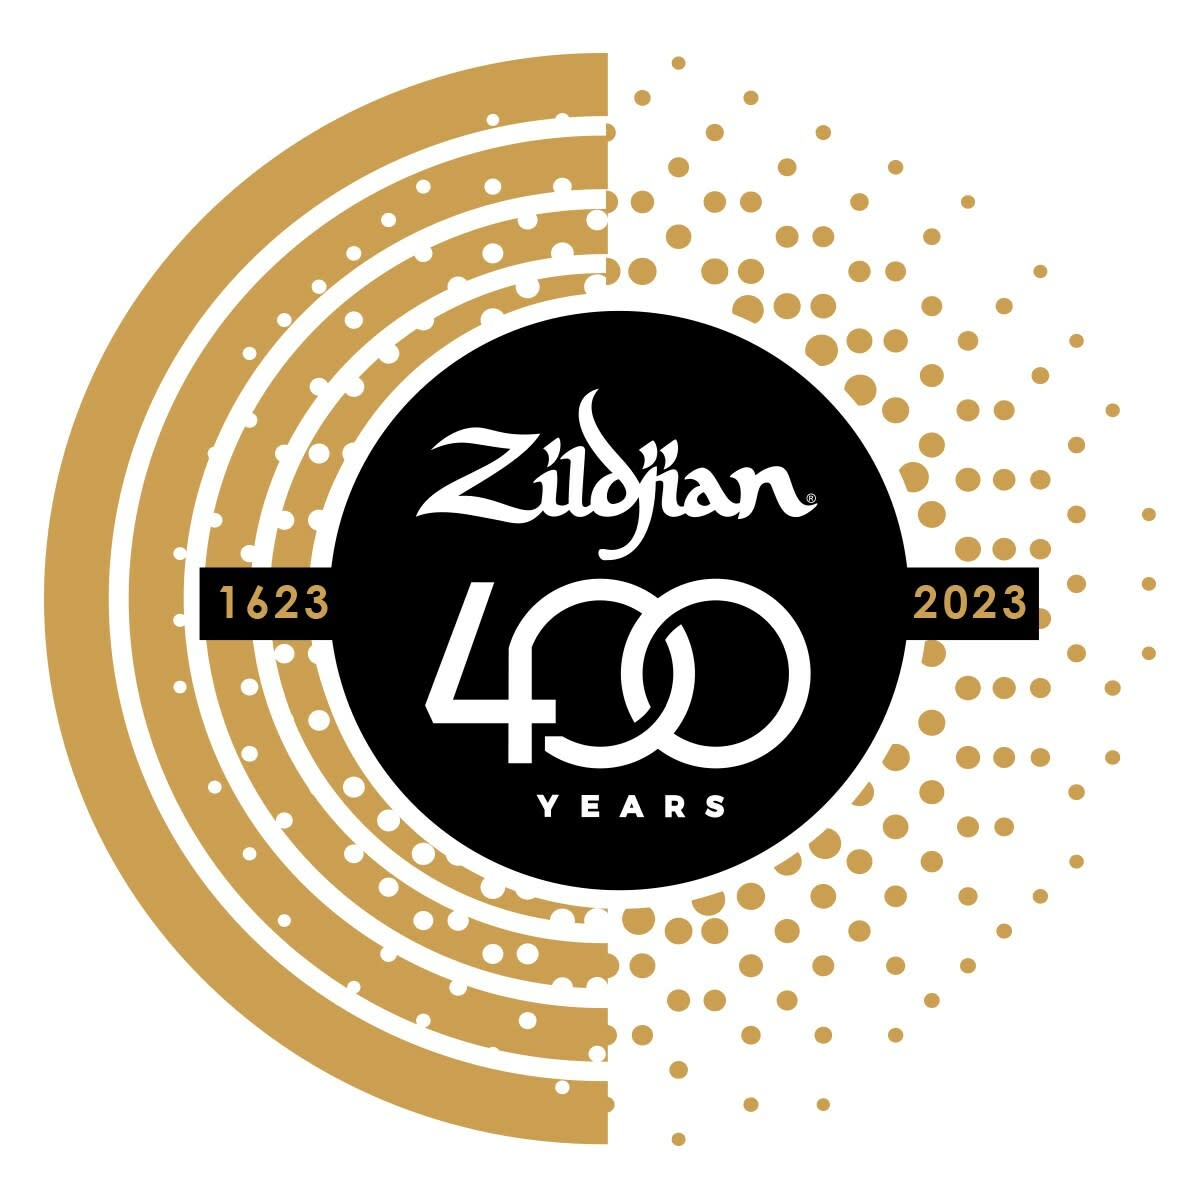  Zildjian 400th anniversary logo. 